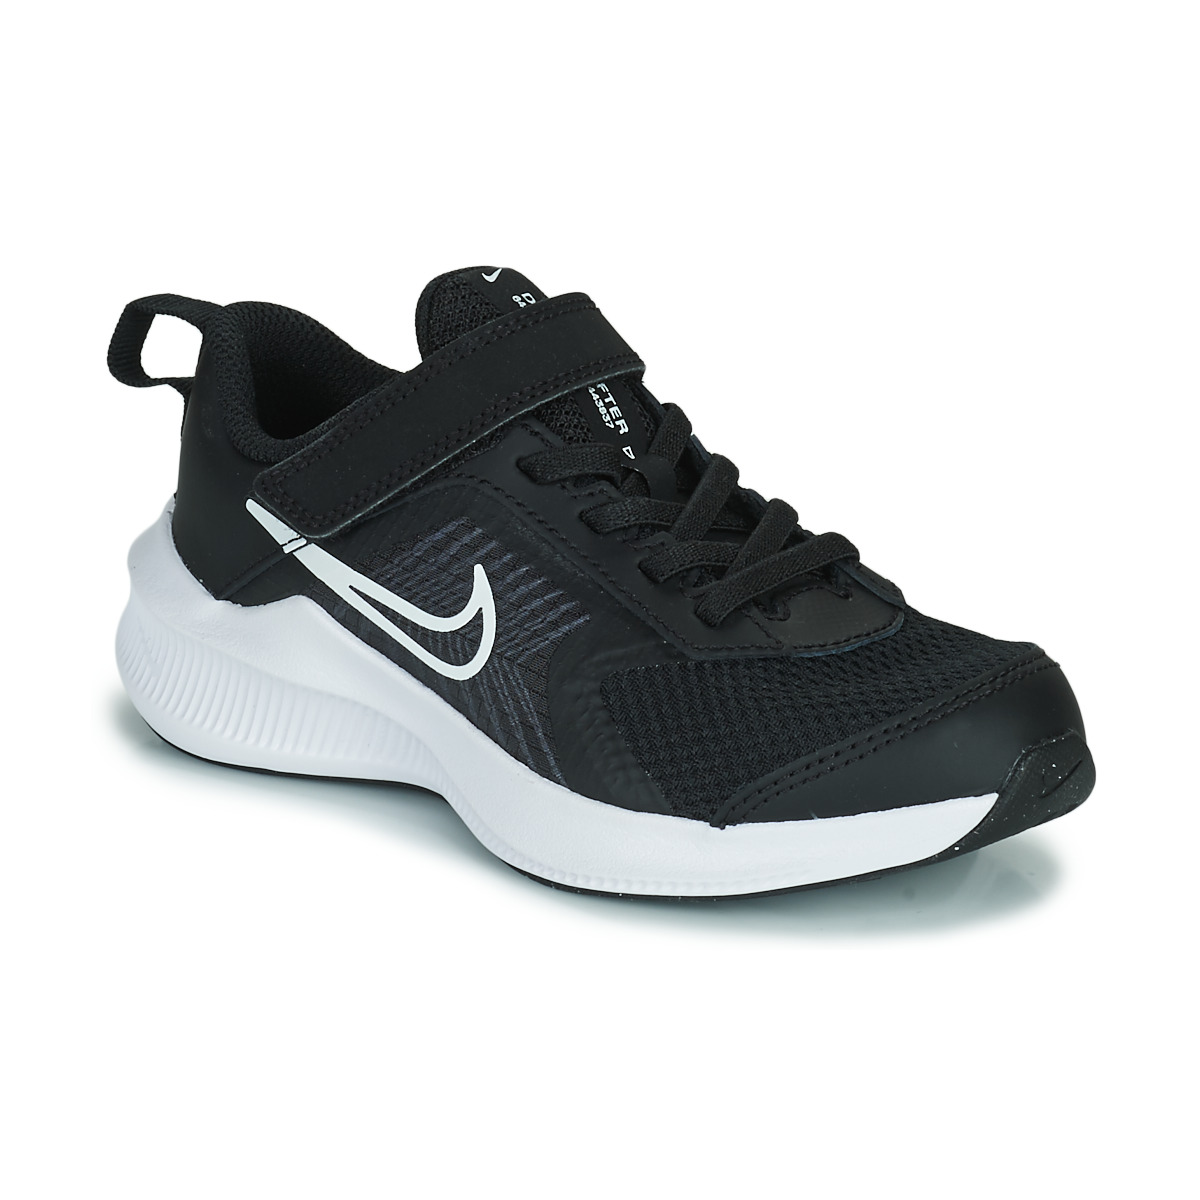 Zapatos Niños Running / trail Nike NIKE DOWNSHIFTER 11 (PSV) Negro / Blanco